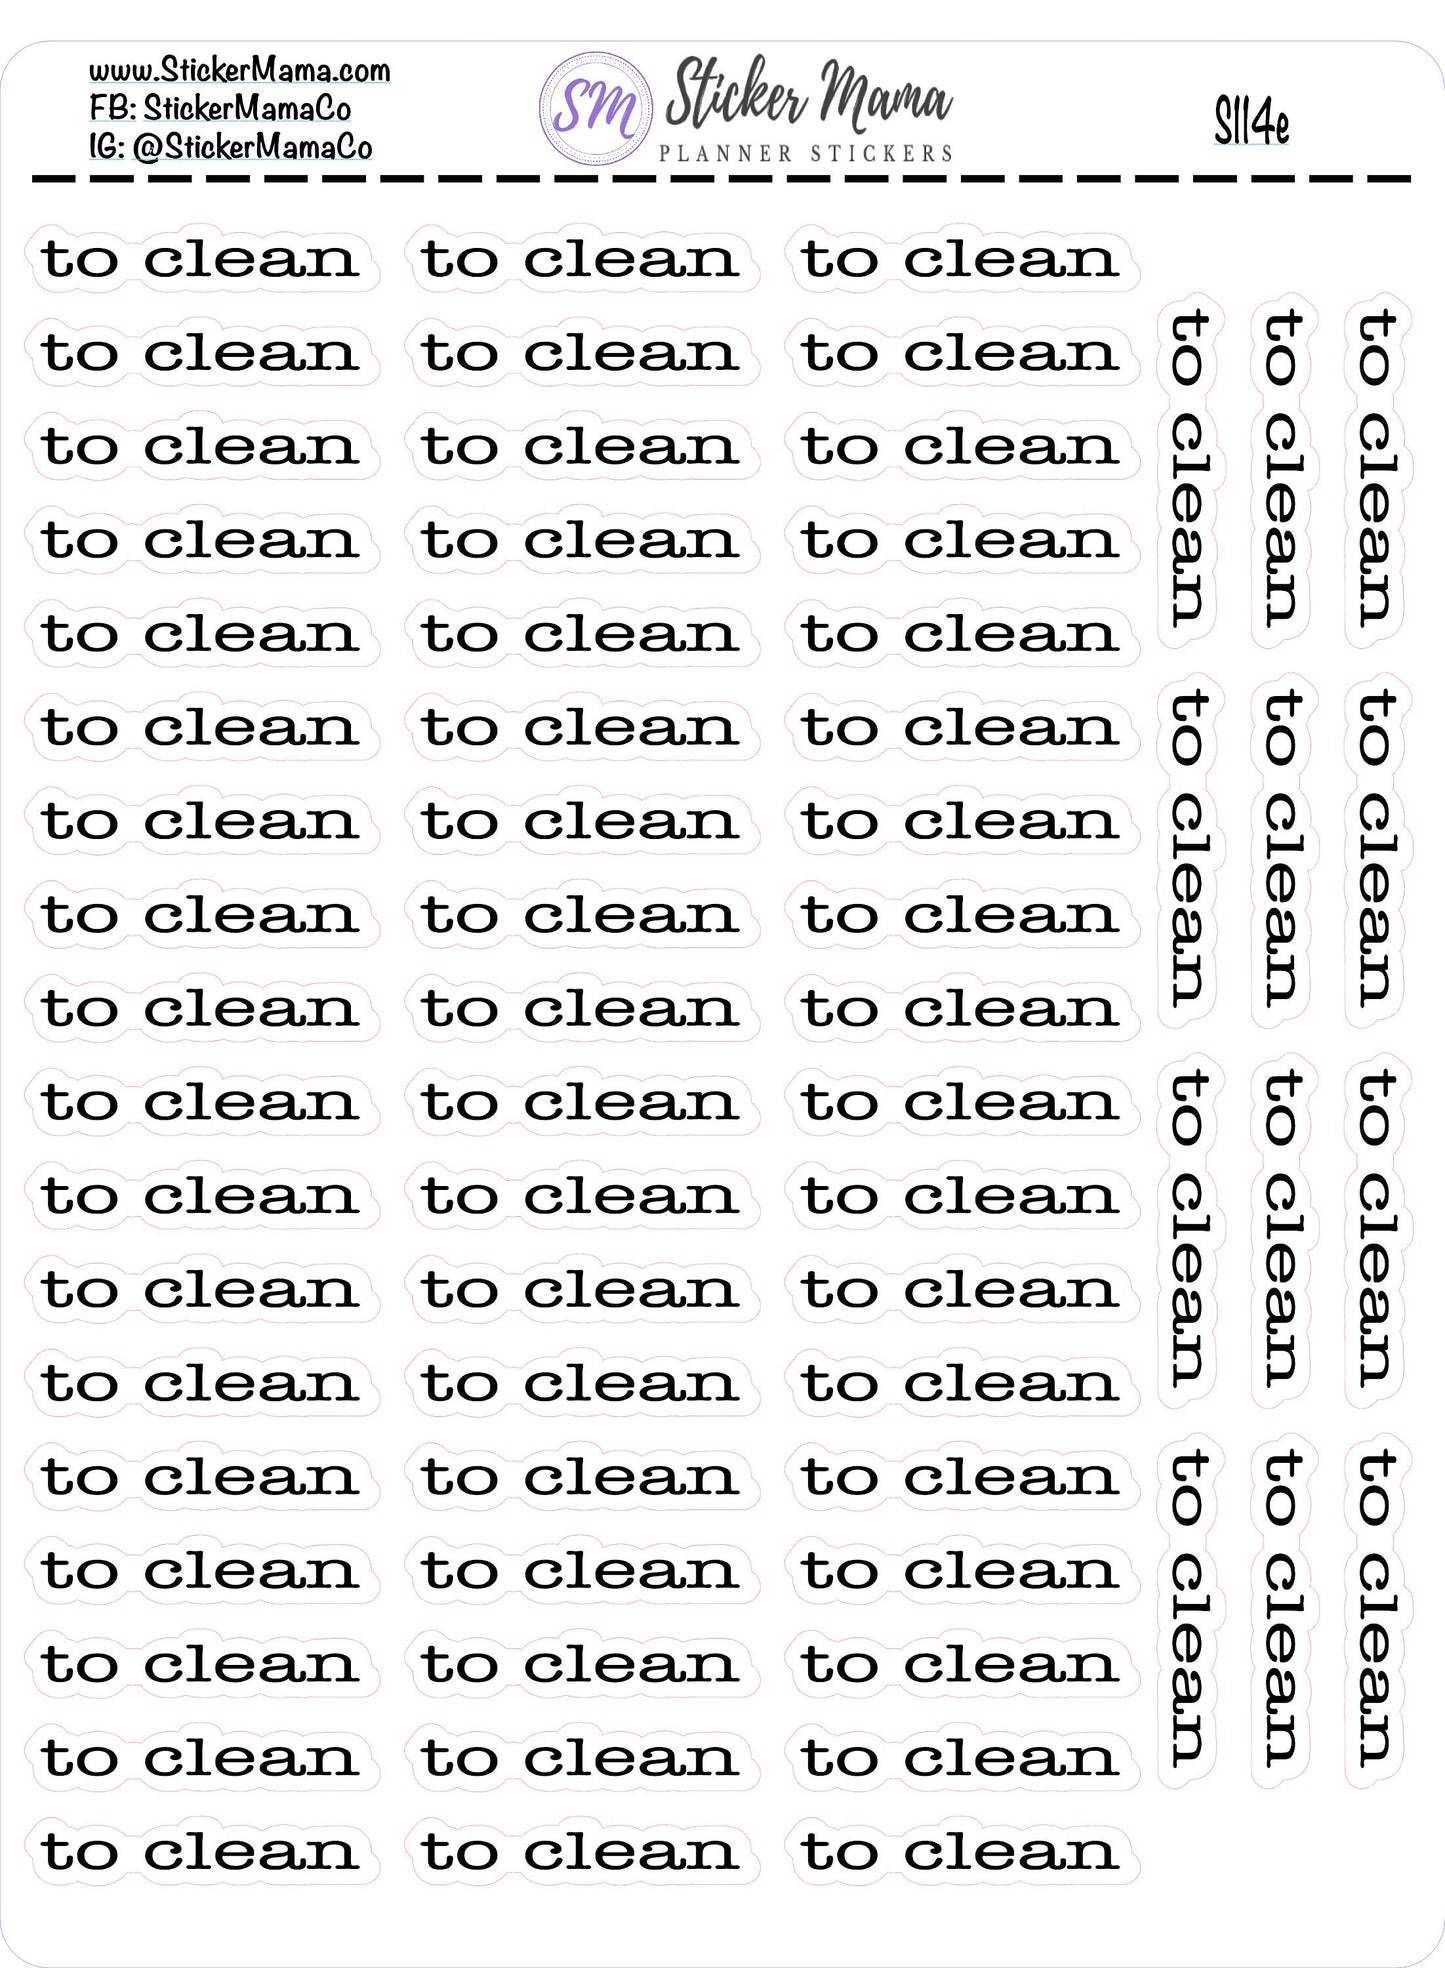 TO CLEAN SCRIPT Planner Stickers S114 JenPlans Script Font Planner Stickers For Work Planner Stickers Go to Work Sticker